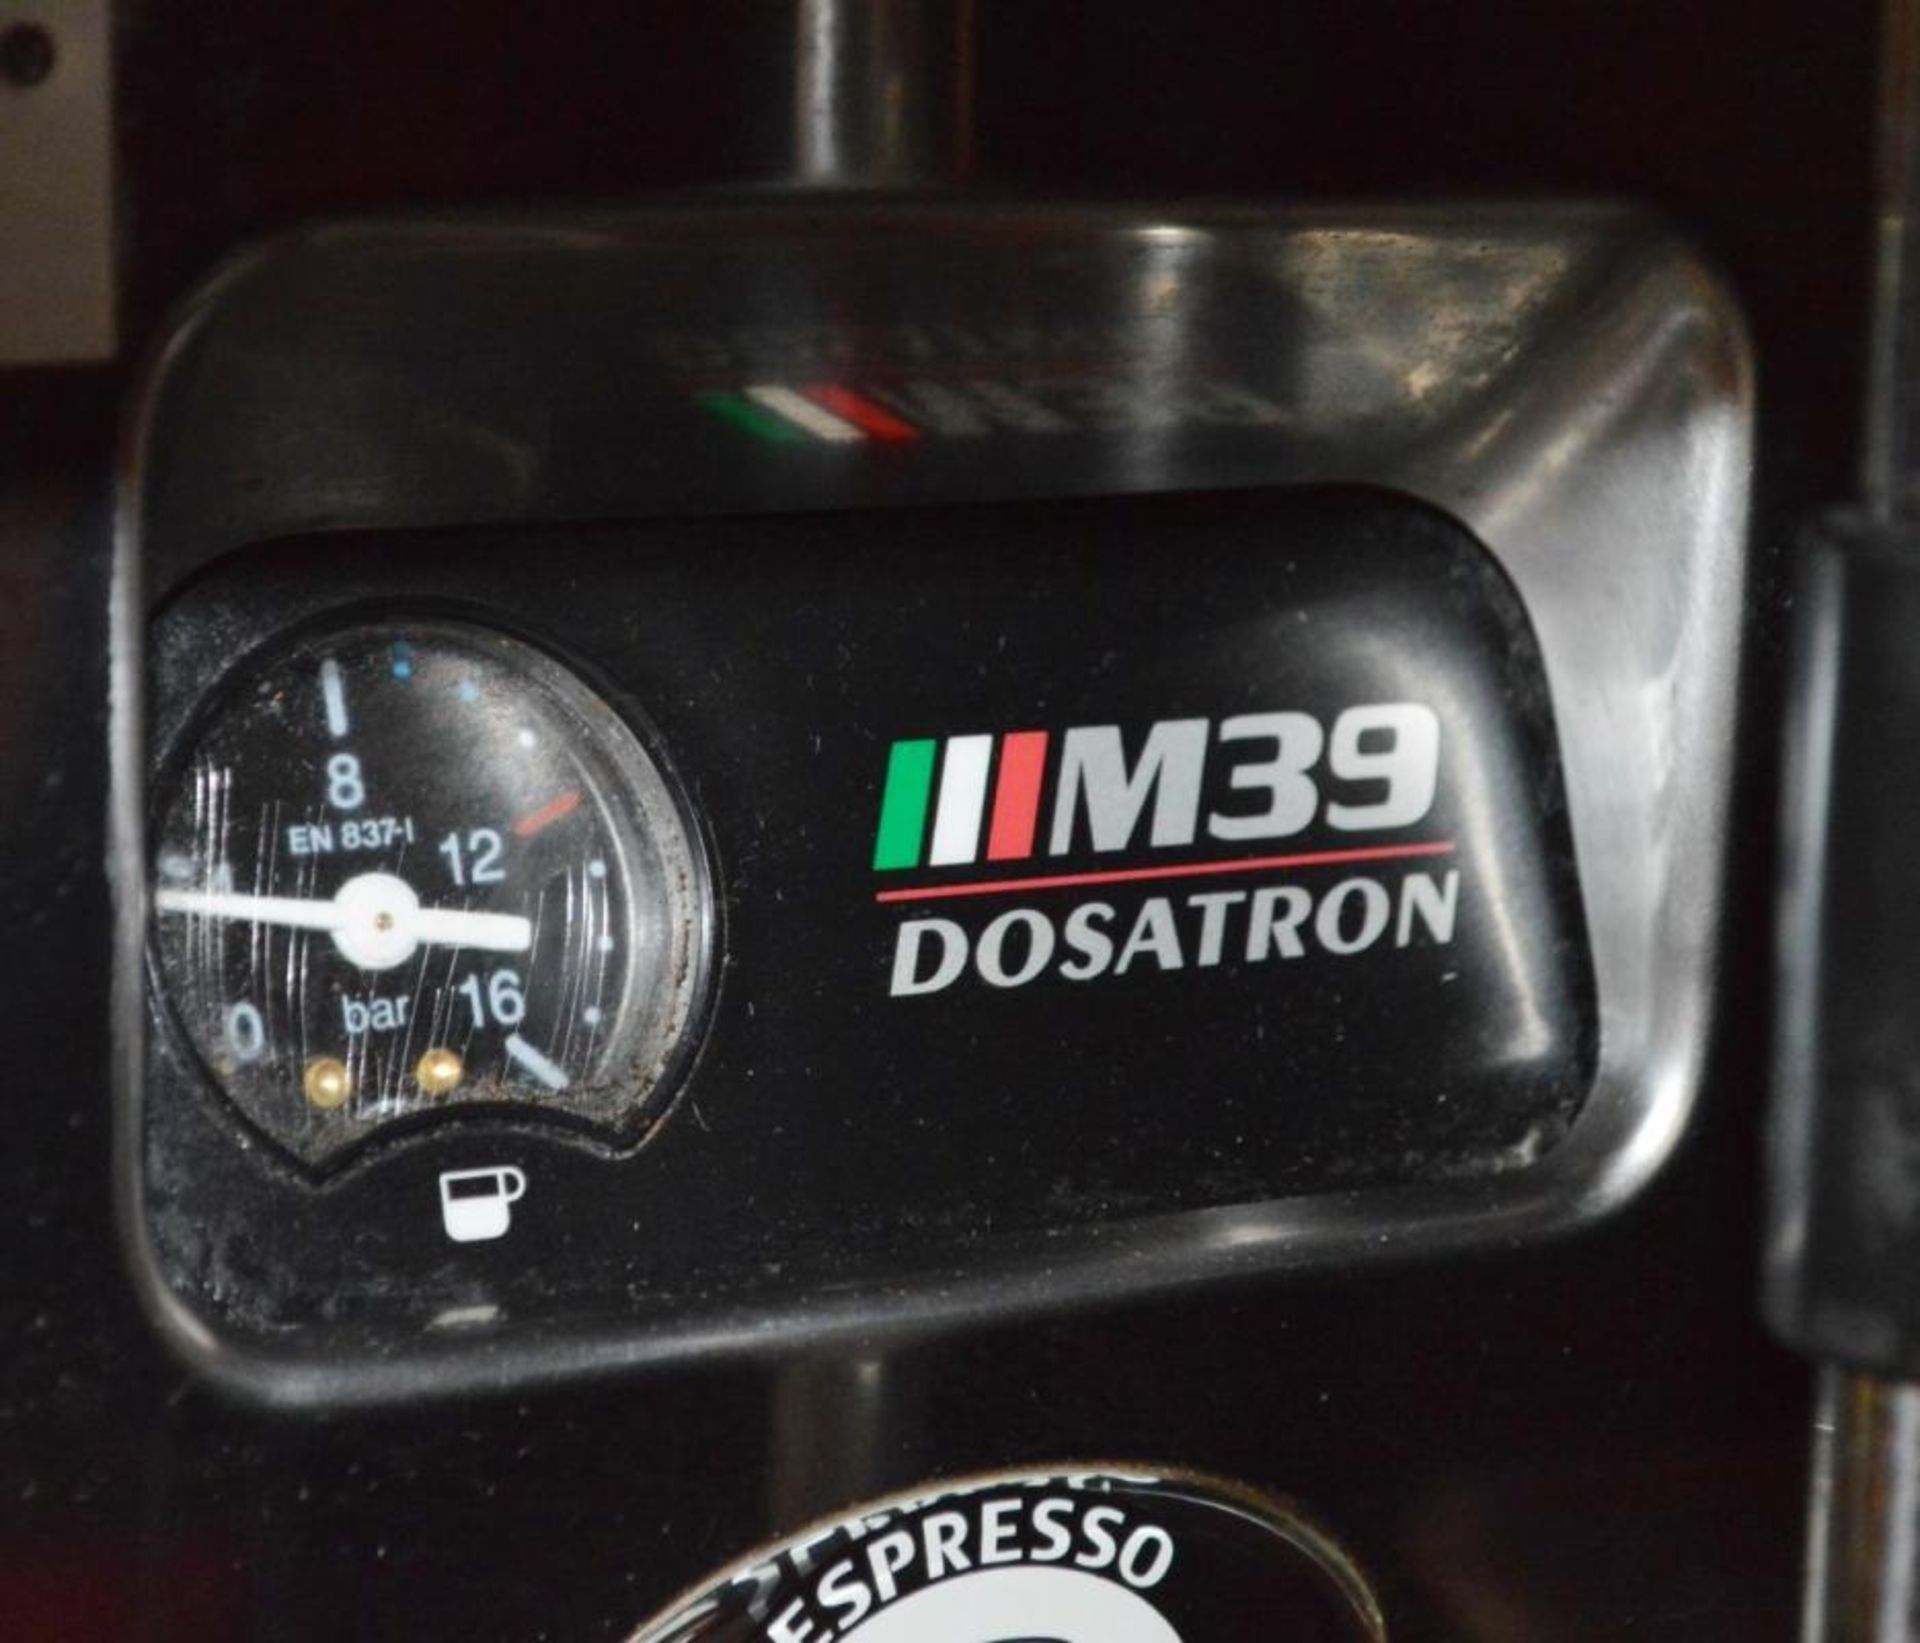 1 x La Cimbalie Espresso & Cappucino 3 Group Coffee Machine in Red - Model M39 Dosatron - Ref - Image 4 of 5